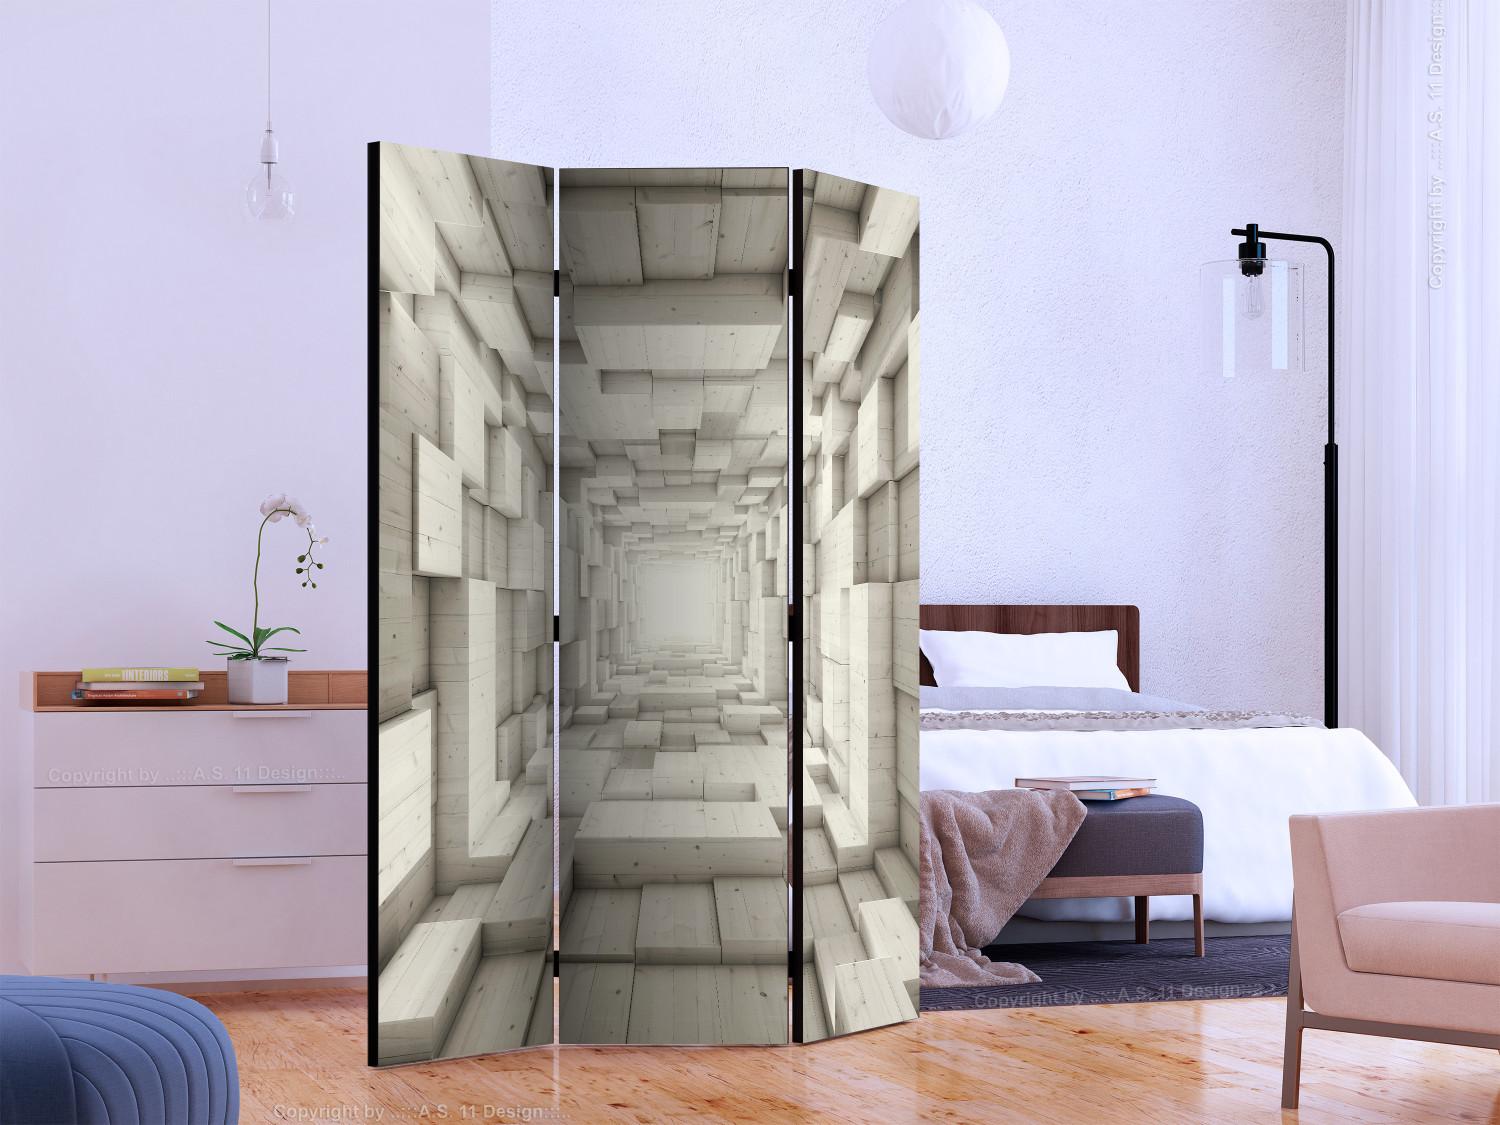 Biombo Elevator II [Room Dividers]